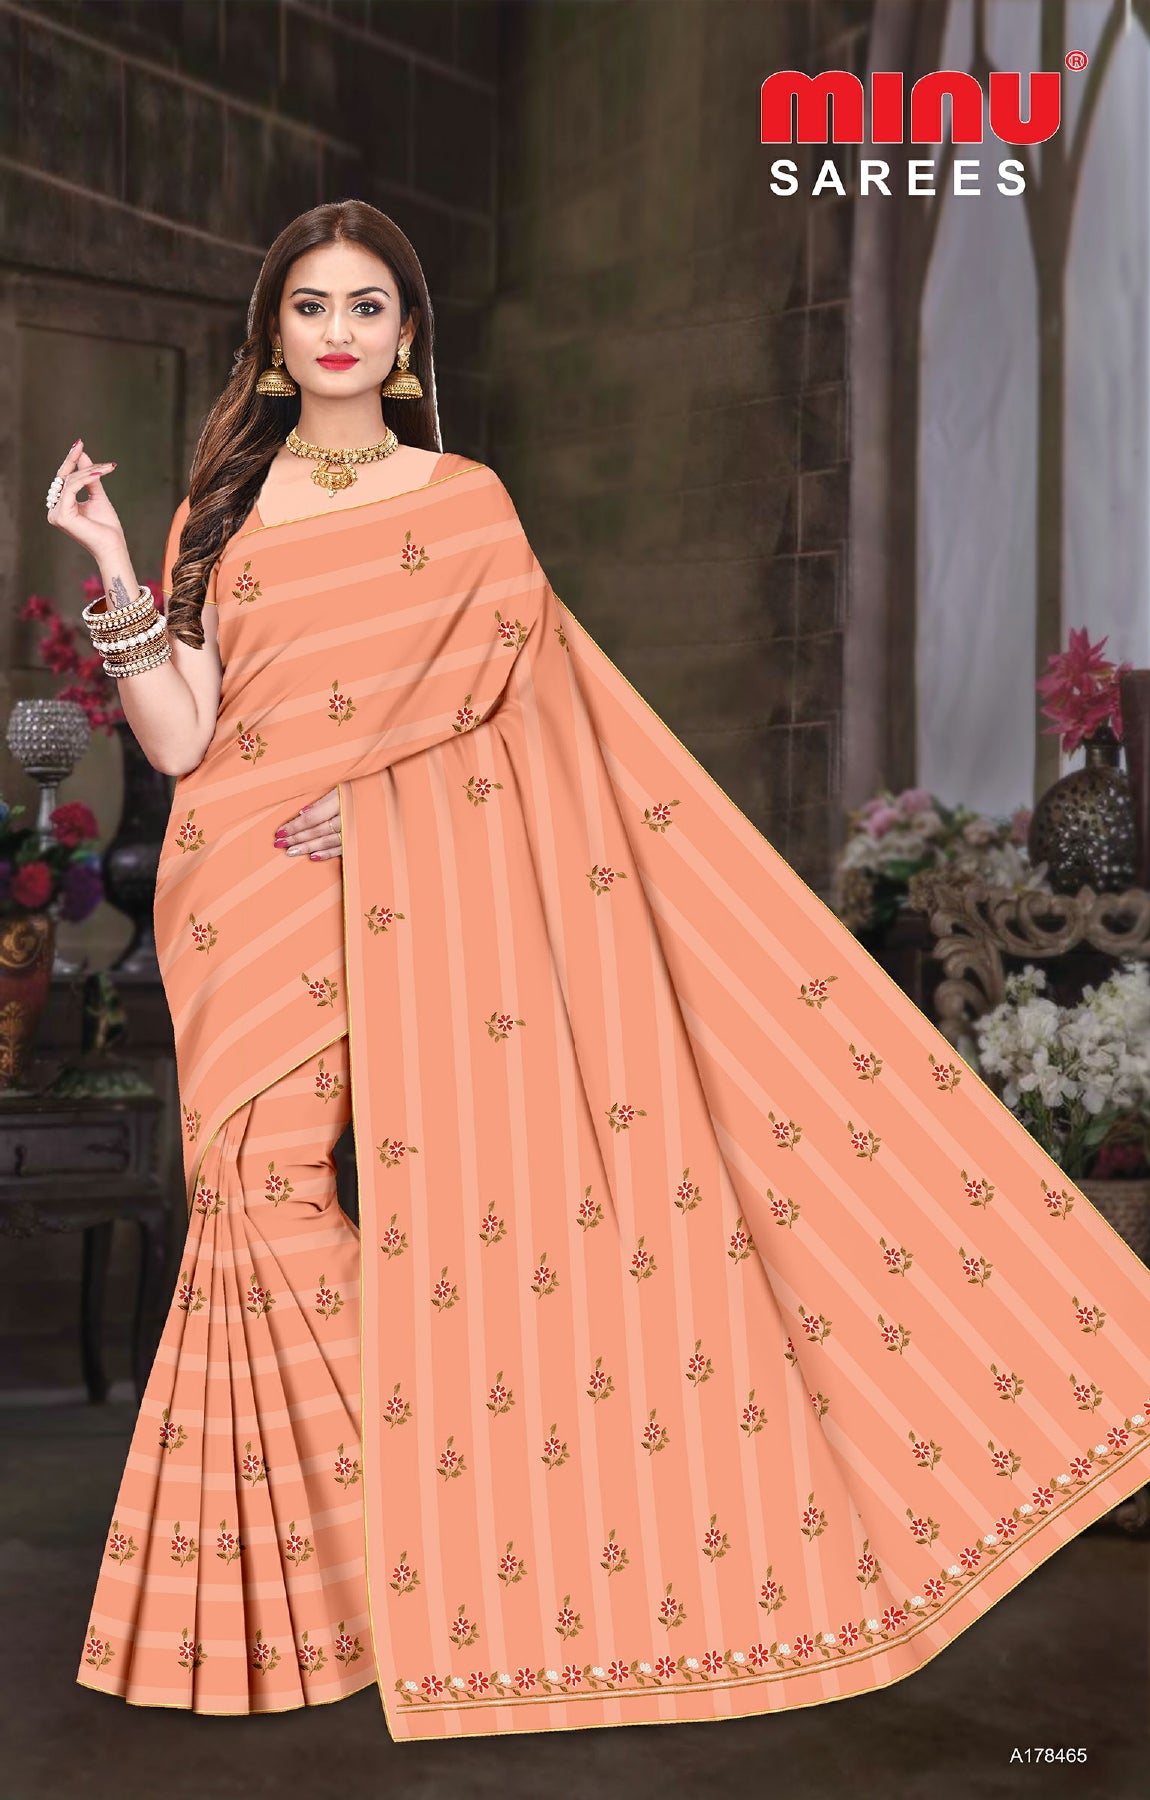 Durga puja trending embroidery saree wearing woman 